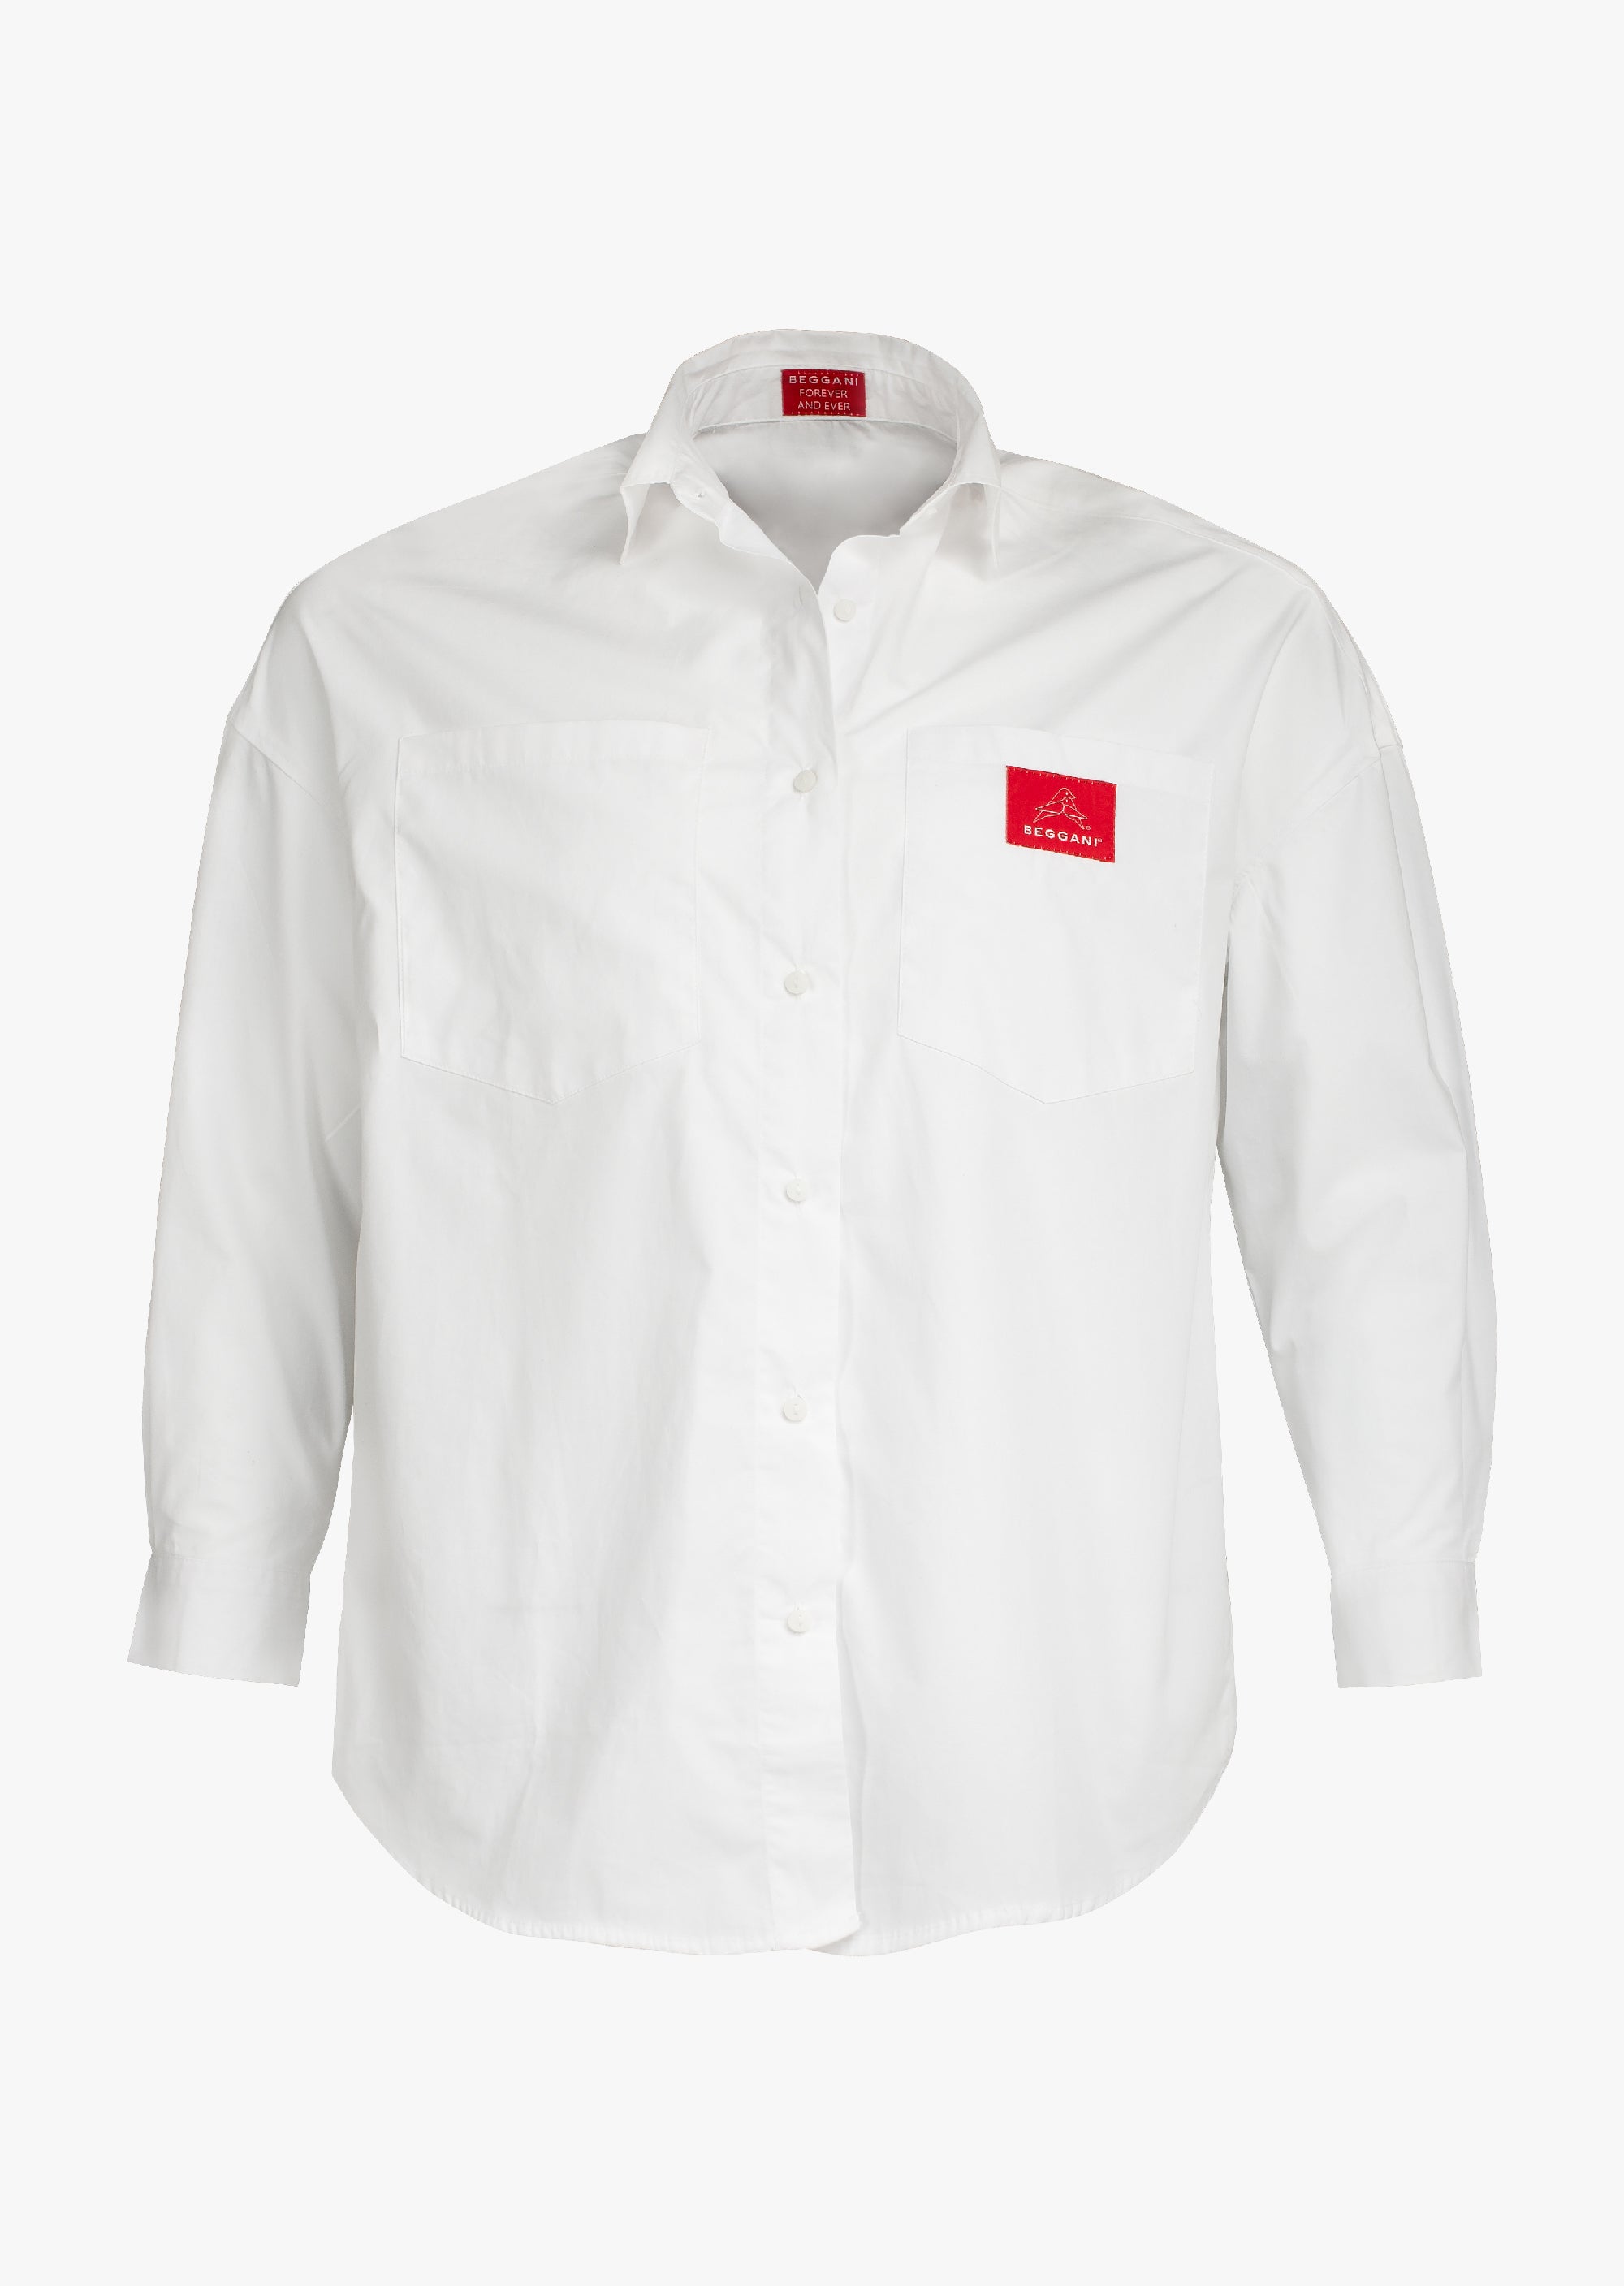 Cotton shirt with logo BEGGANI